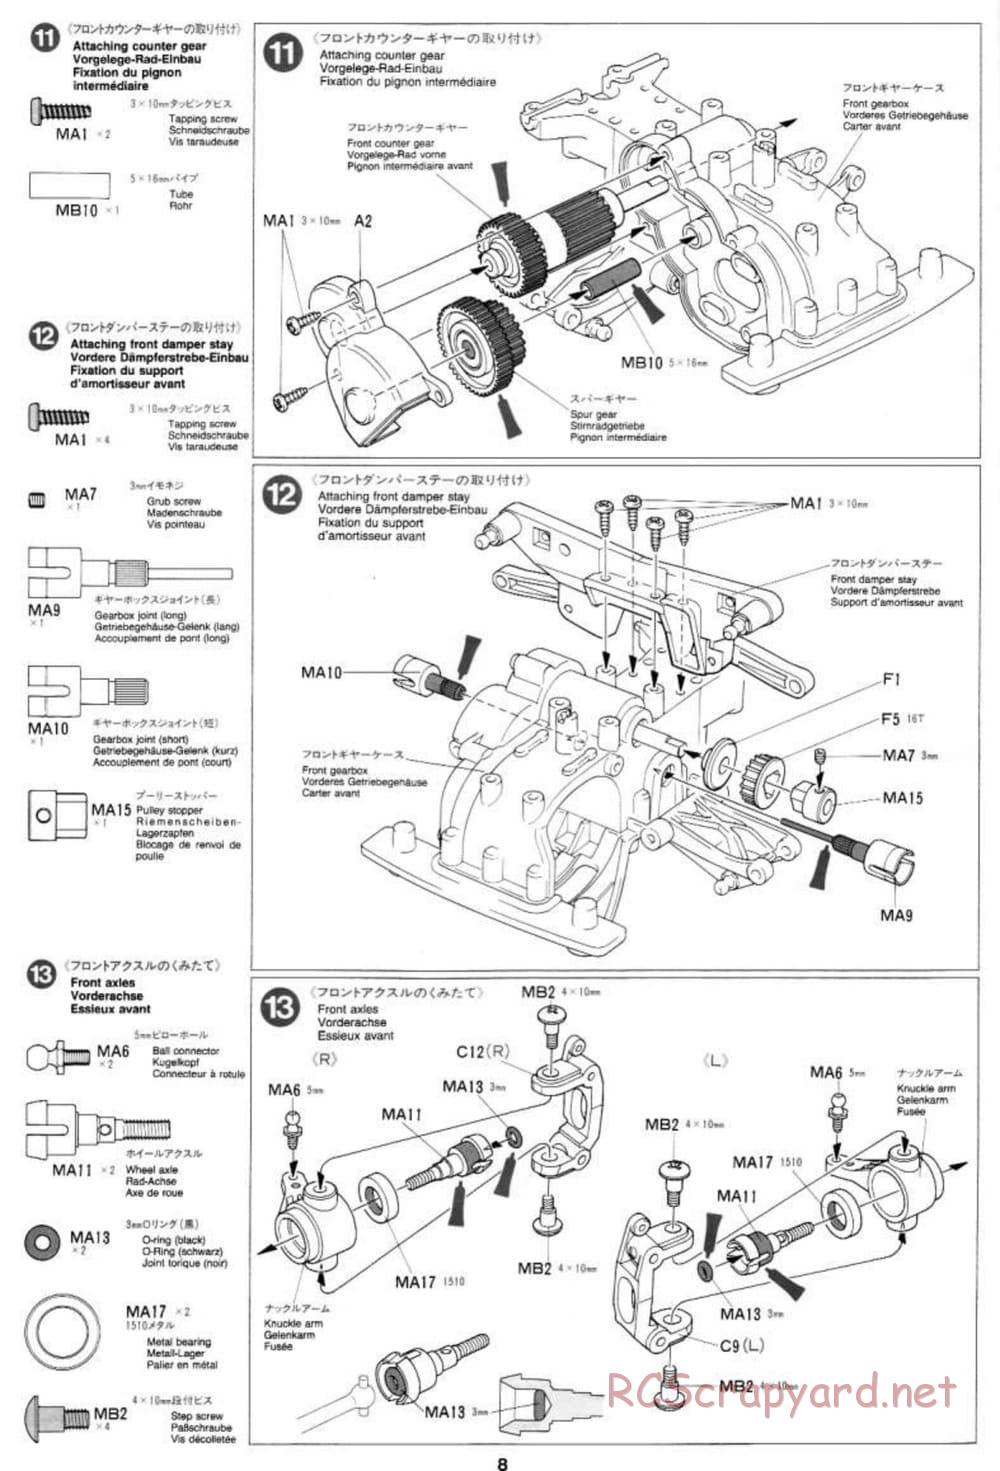 Tamiya - Subaru Impreza WRC 97 - TA-03F Chassis - Manual - Page 8